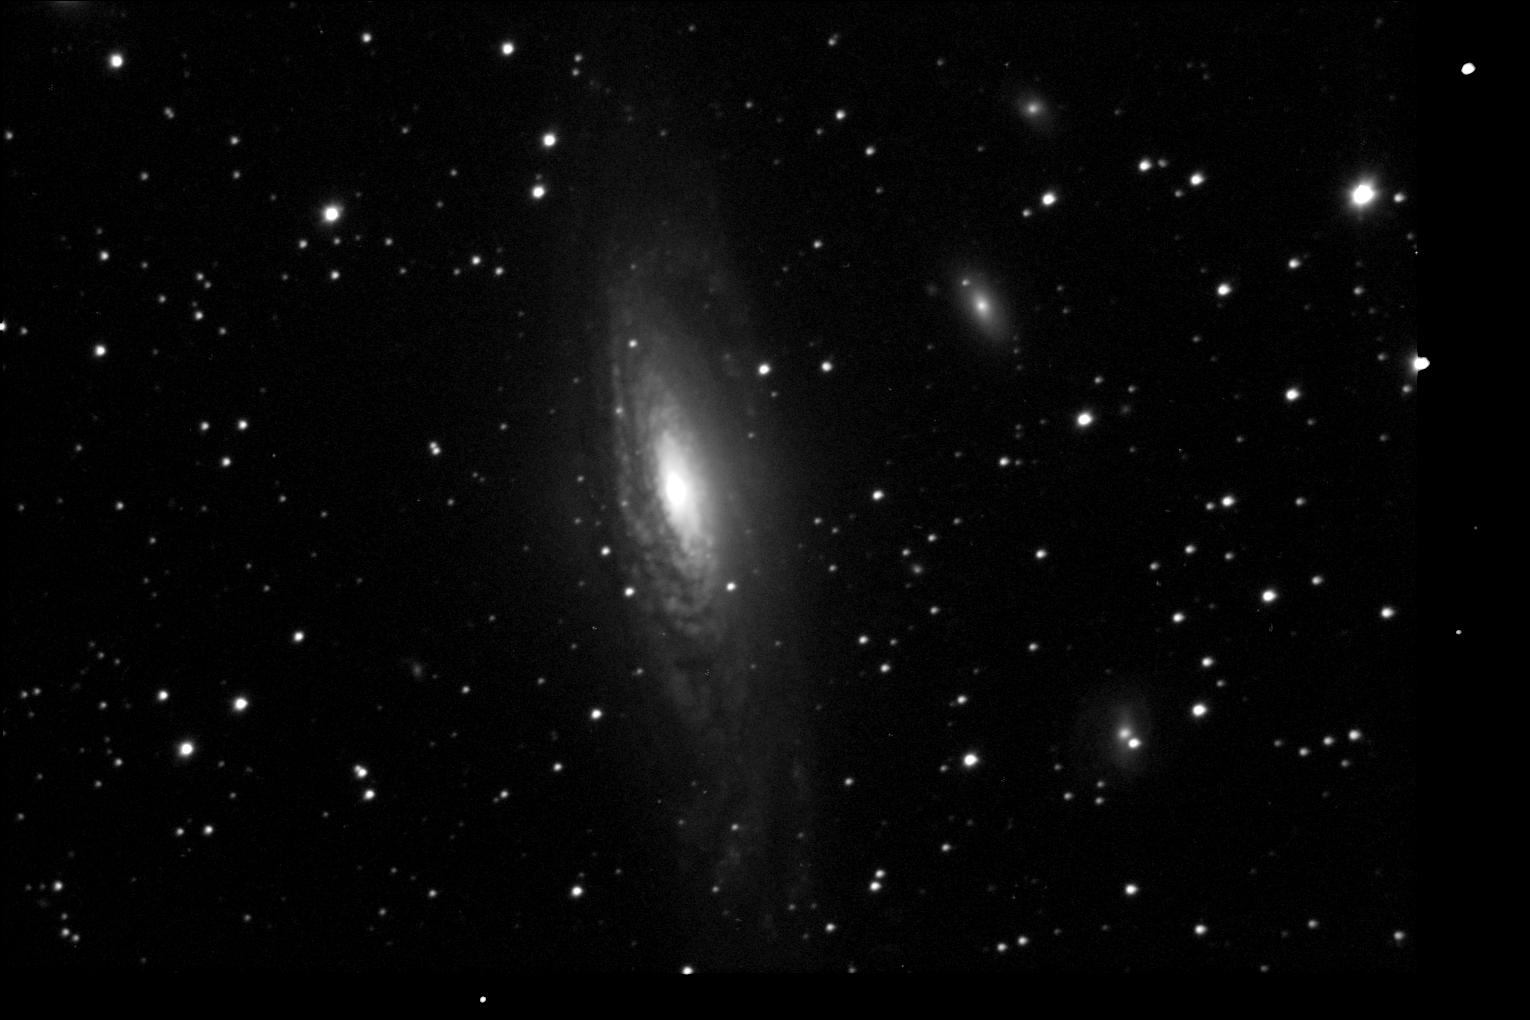 NGC7331-x1-10x180s sans filtre +log